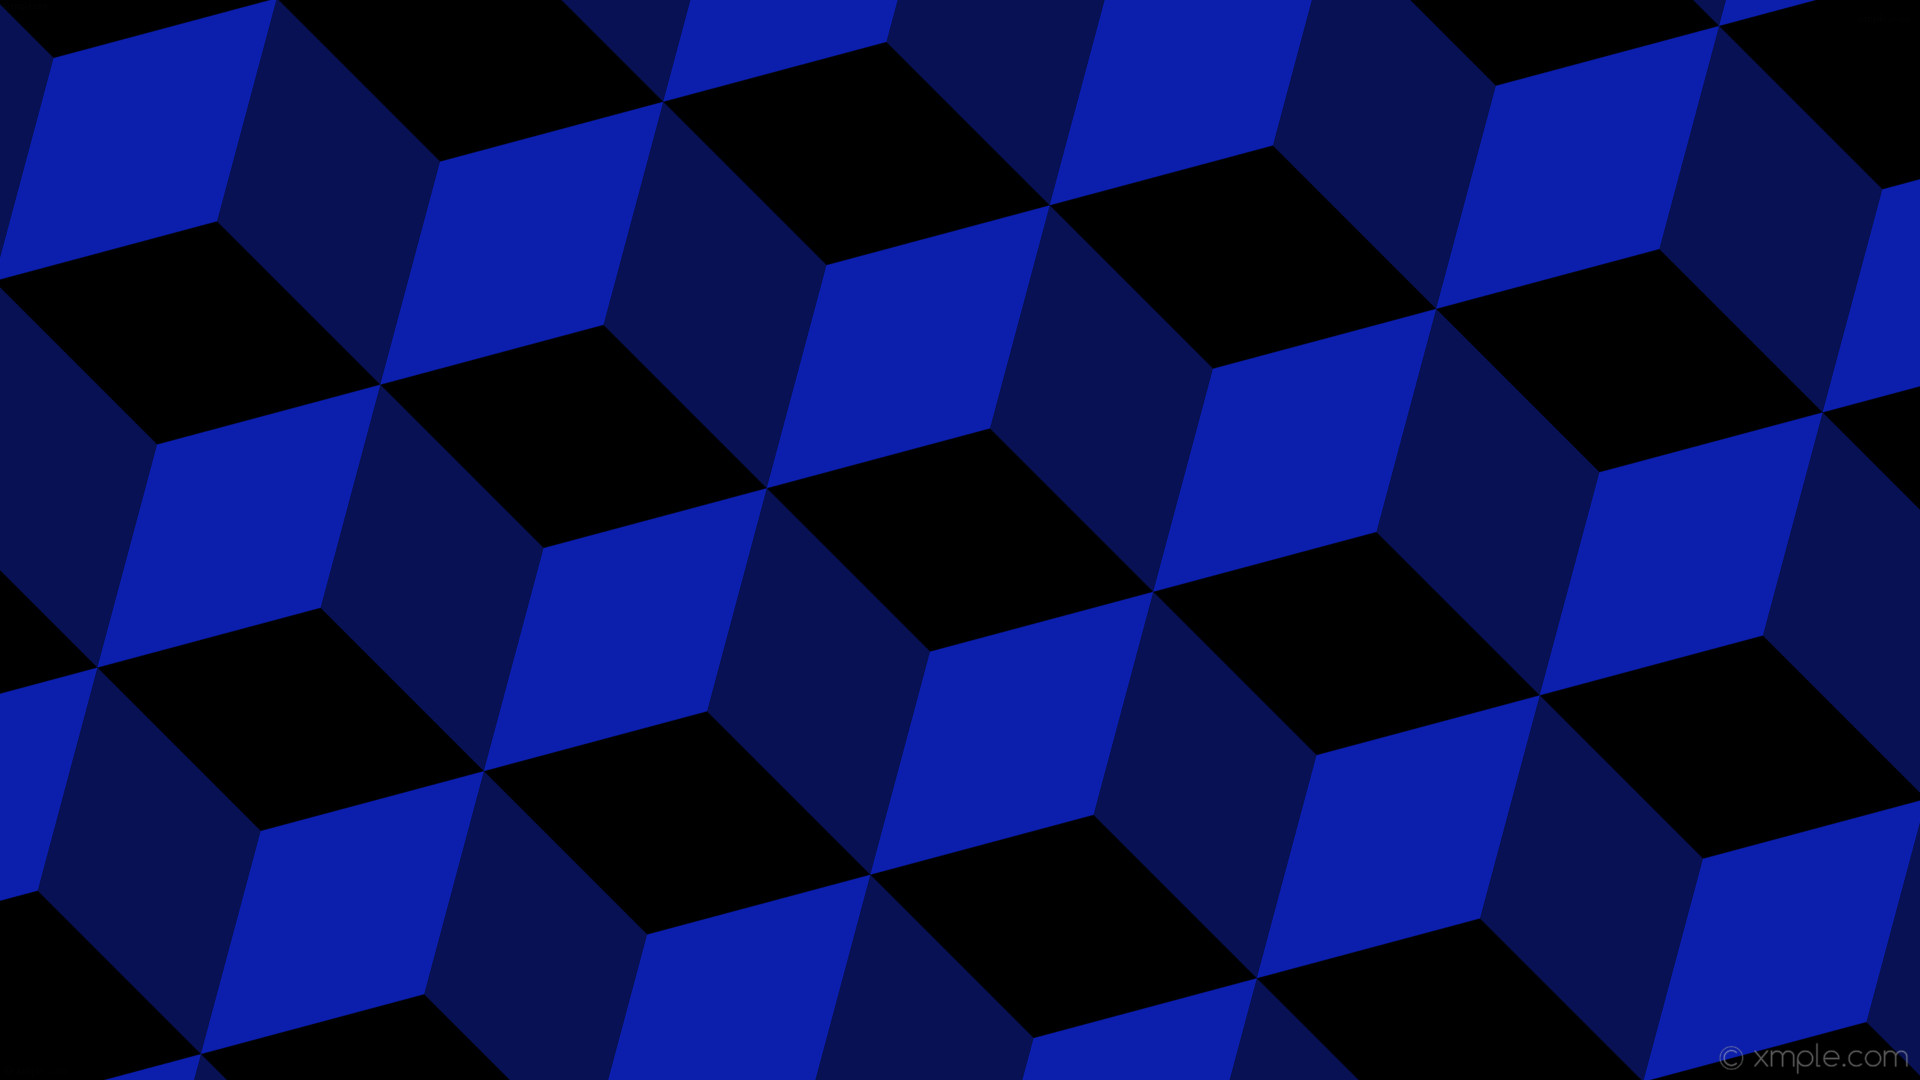 1920x1080 wallpaper 3d cubes blue black dark blue #000000 #081154 #0b1eac 345Â° 231px